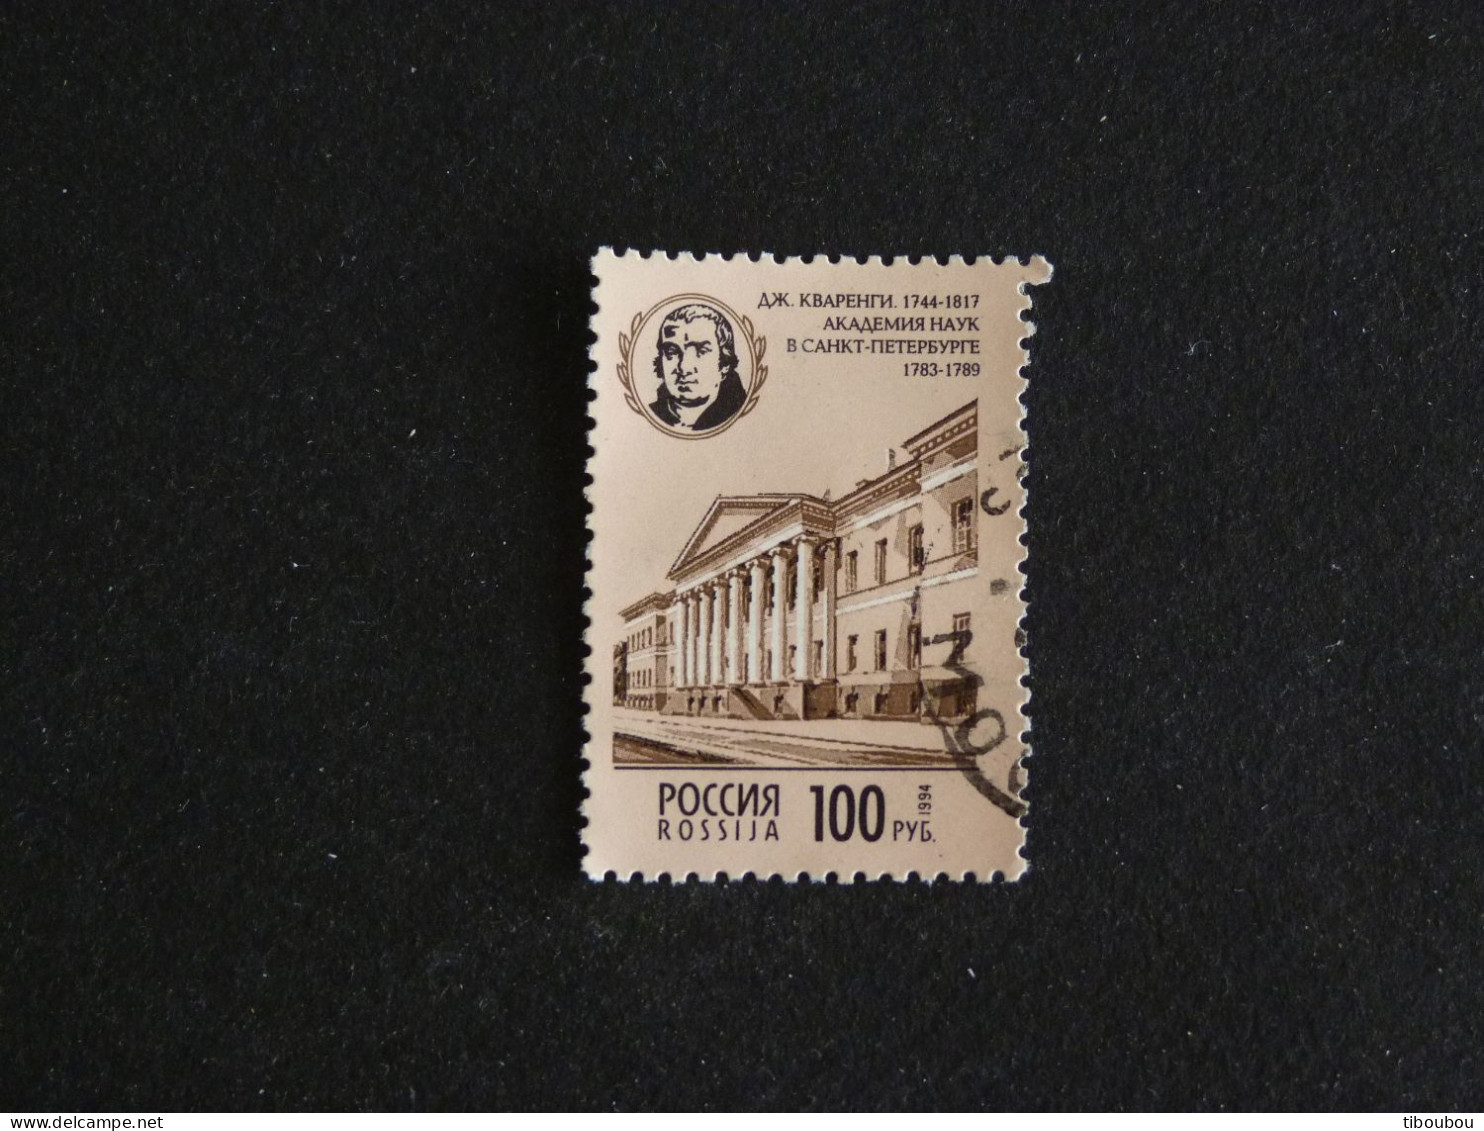 RUSSIE RUSSIA ROSSIJA URSS CCCP YT 6070 OBLITERE - ACADEMIE DES SCIENCES DE SAINT PETERSBOURG - Used Stamps